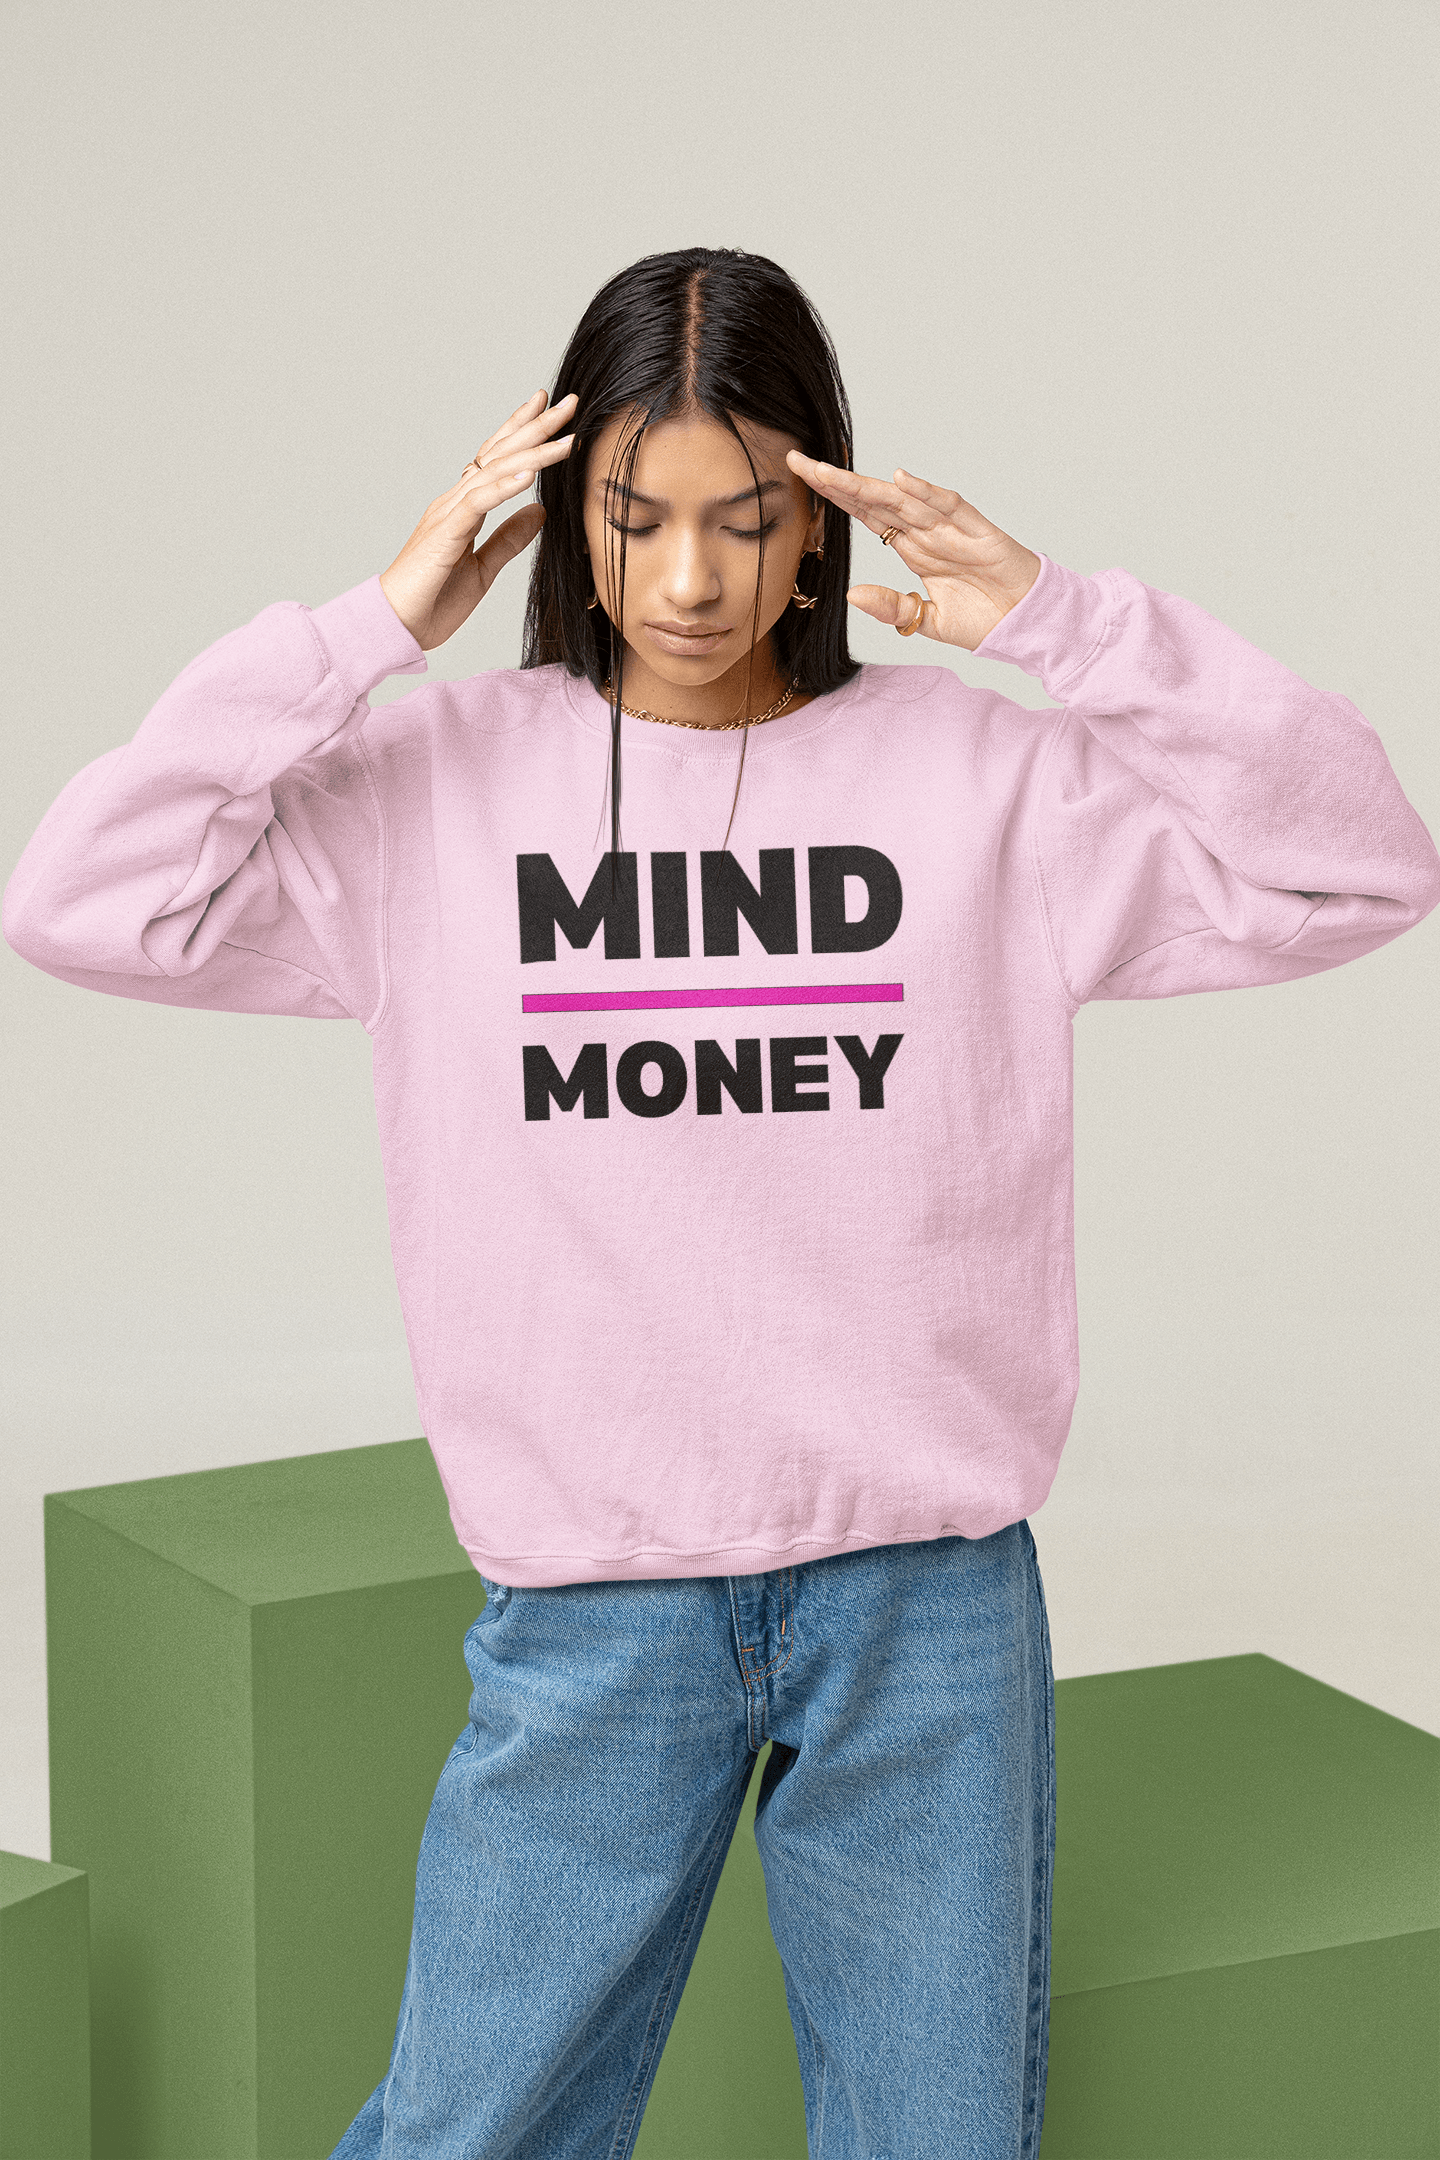 Mind Over Money Sweatshirt 🧠